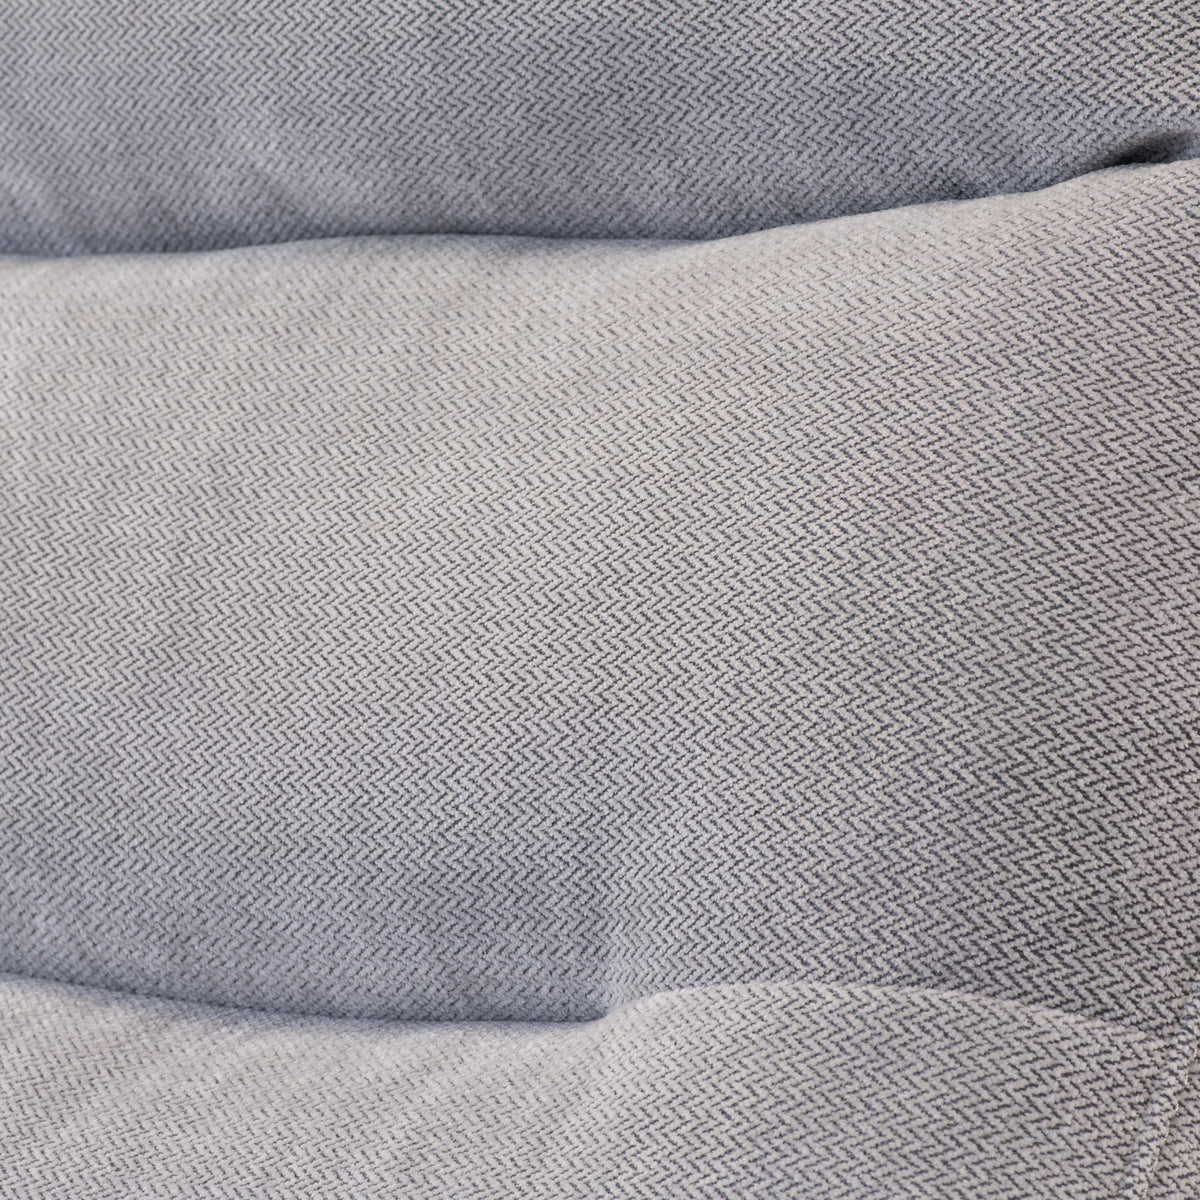 Dalton Silver Grey Fabric Electric Reclining 2 Seater Sofa from Roseland furniture